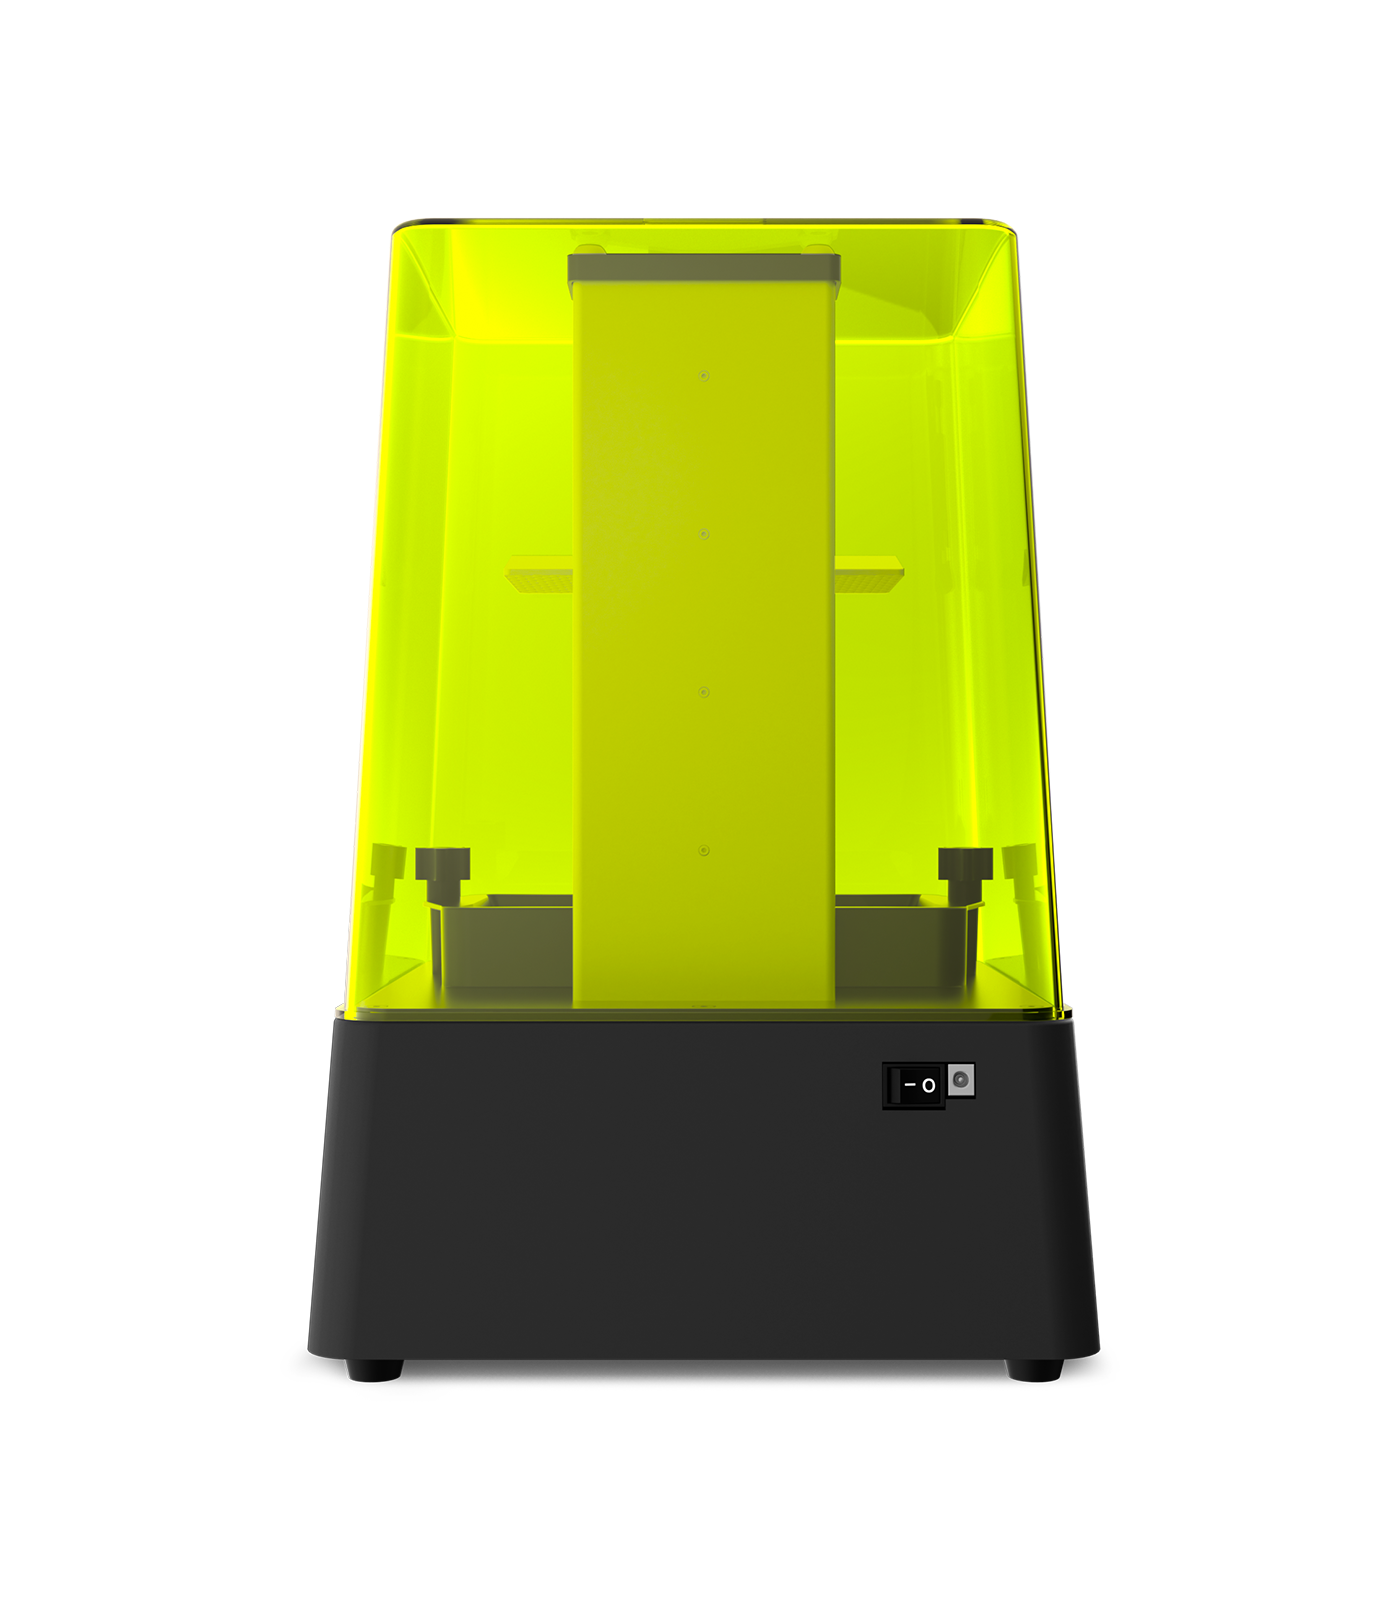 Phrozen Sonic Mini 8K S Resin 3D Printer